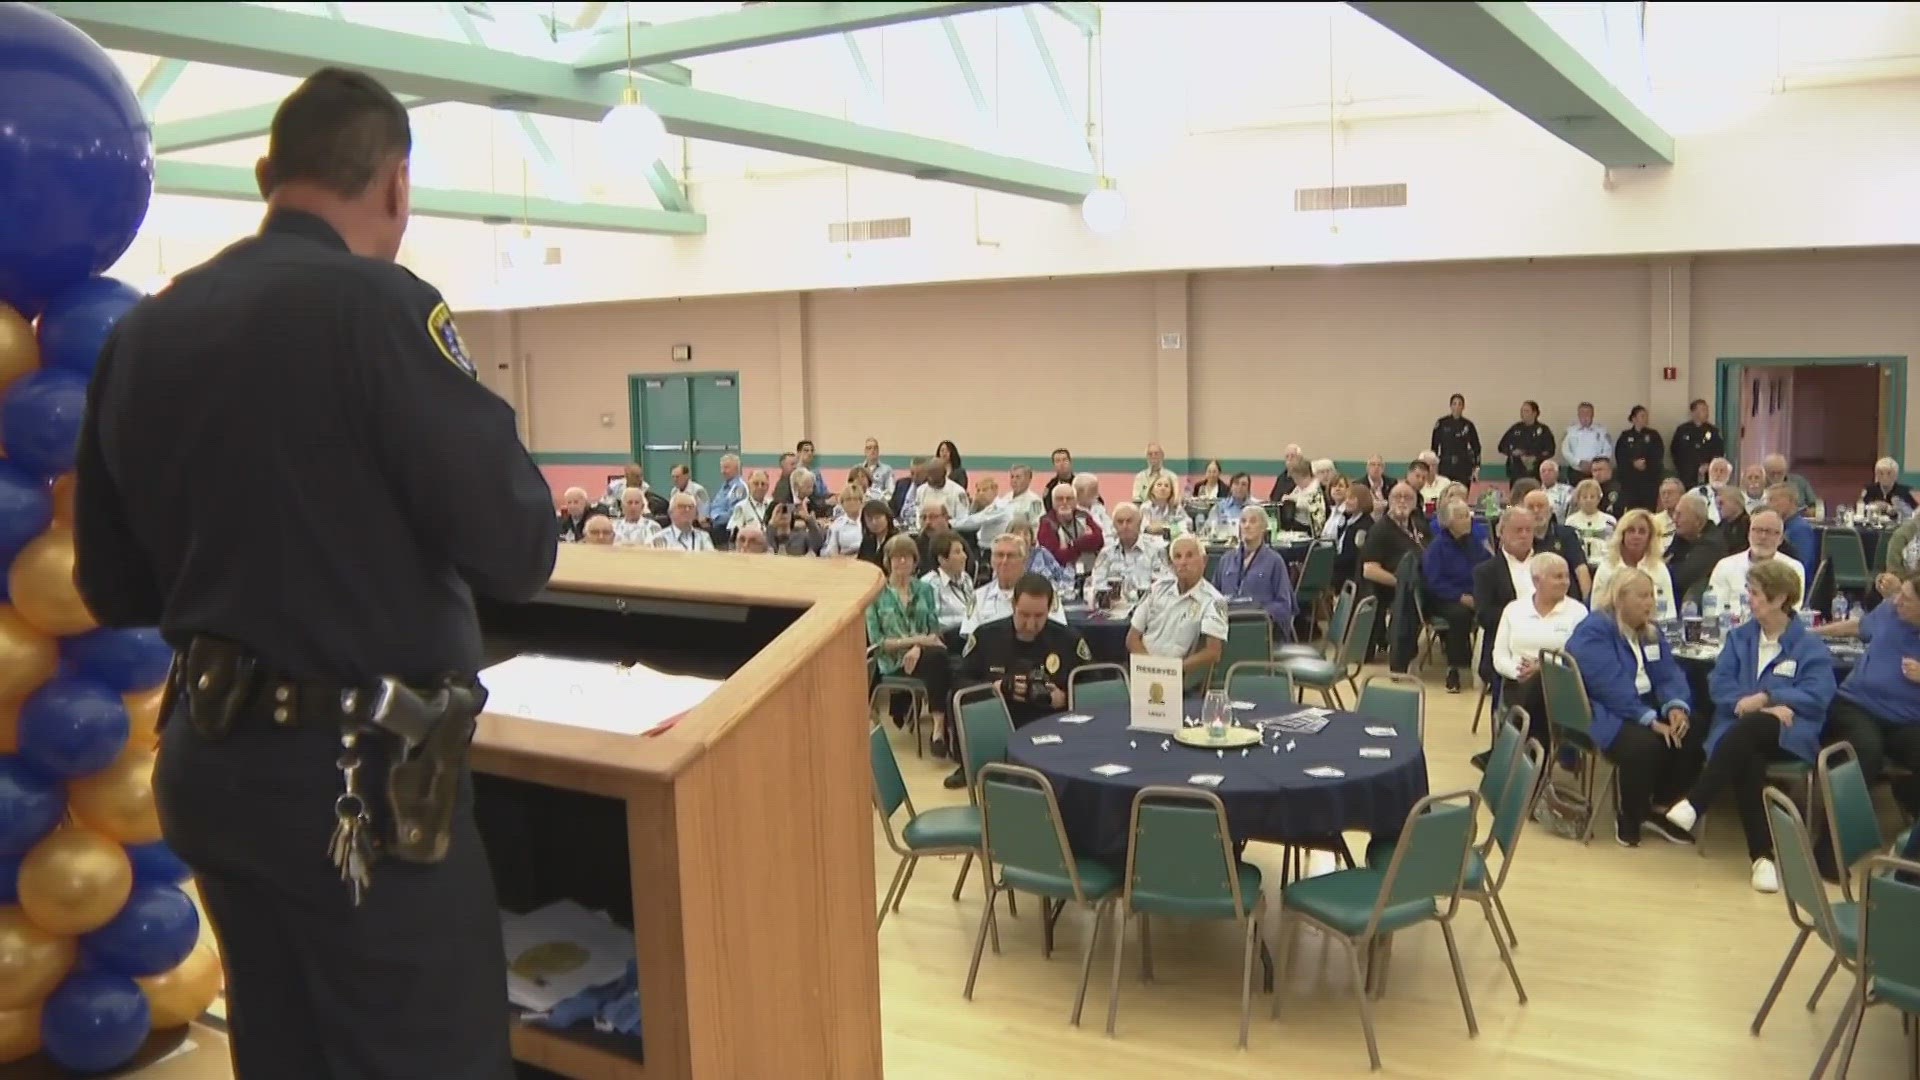 San Diego Police Department honored 275 volunteers at luncheon.